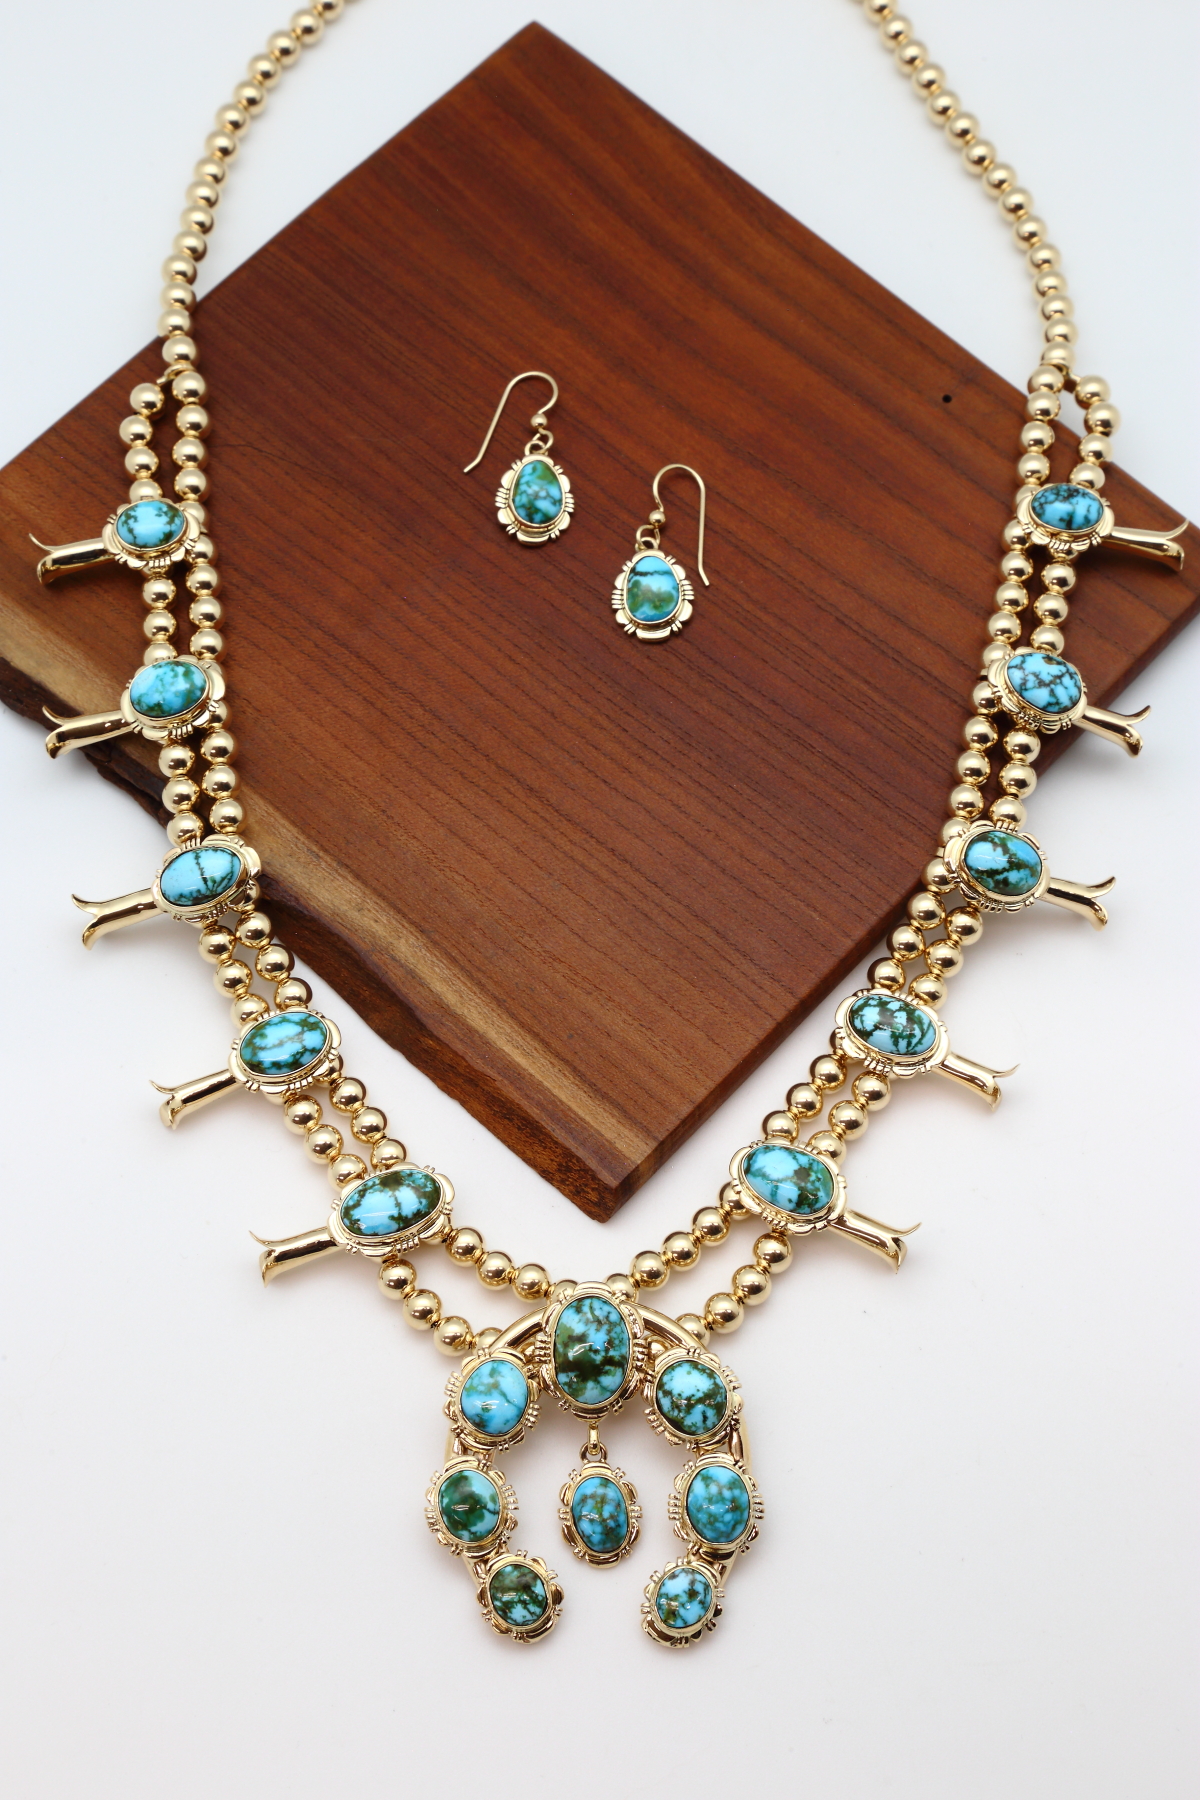 Zuni Squash Blossom Necklace, c. 1940 | Silver turquoise jewelry, Beautiful  turquoise jewelry, Turquoise bead bracelet